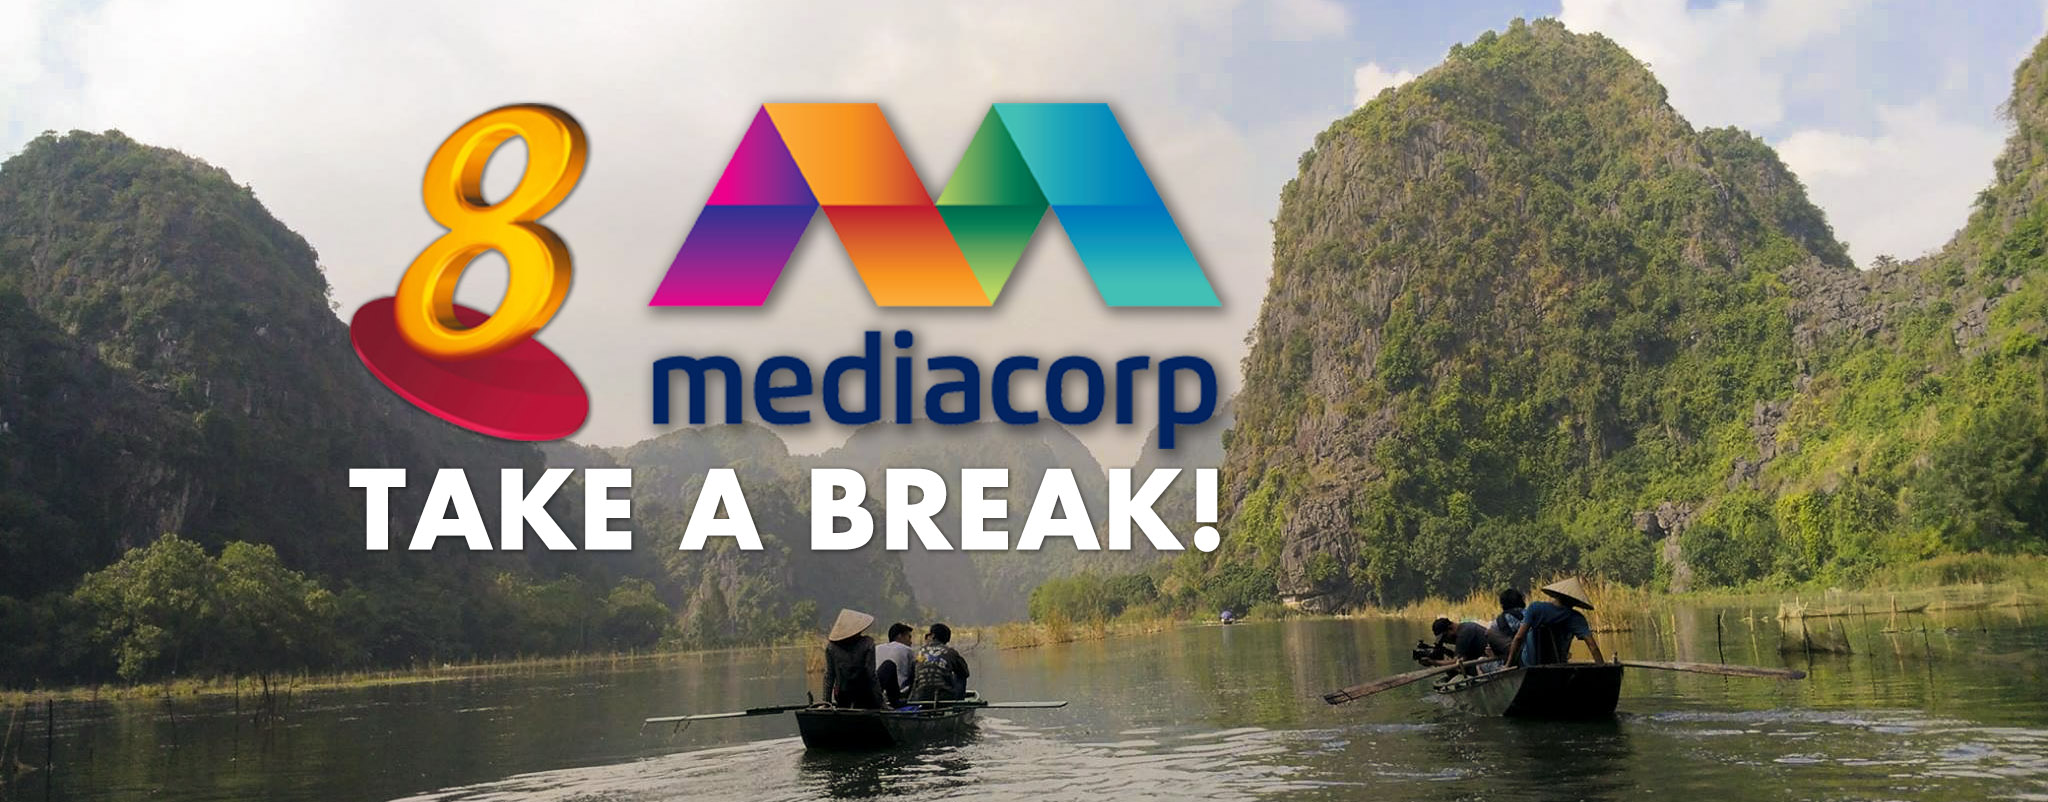 MediaCorp: Take A Break!